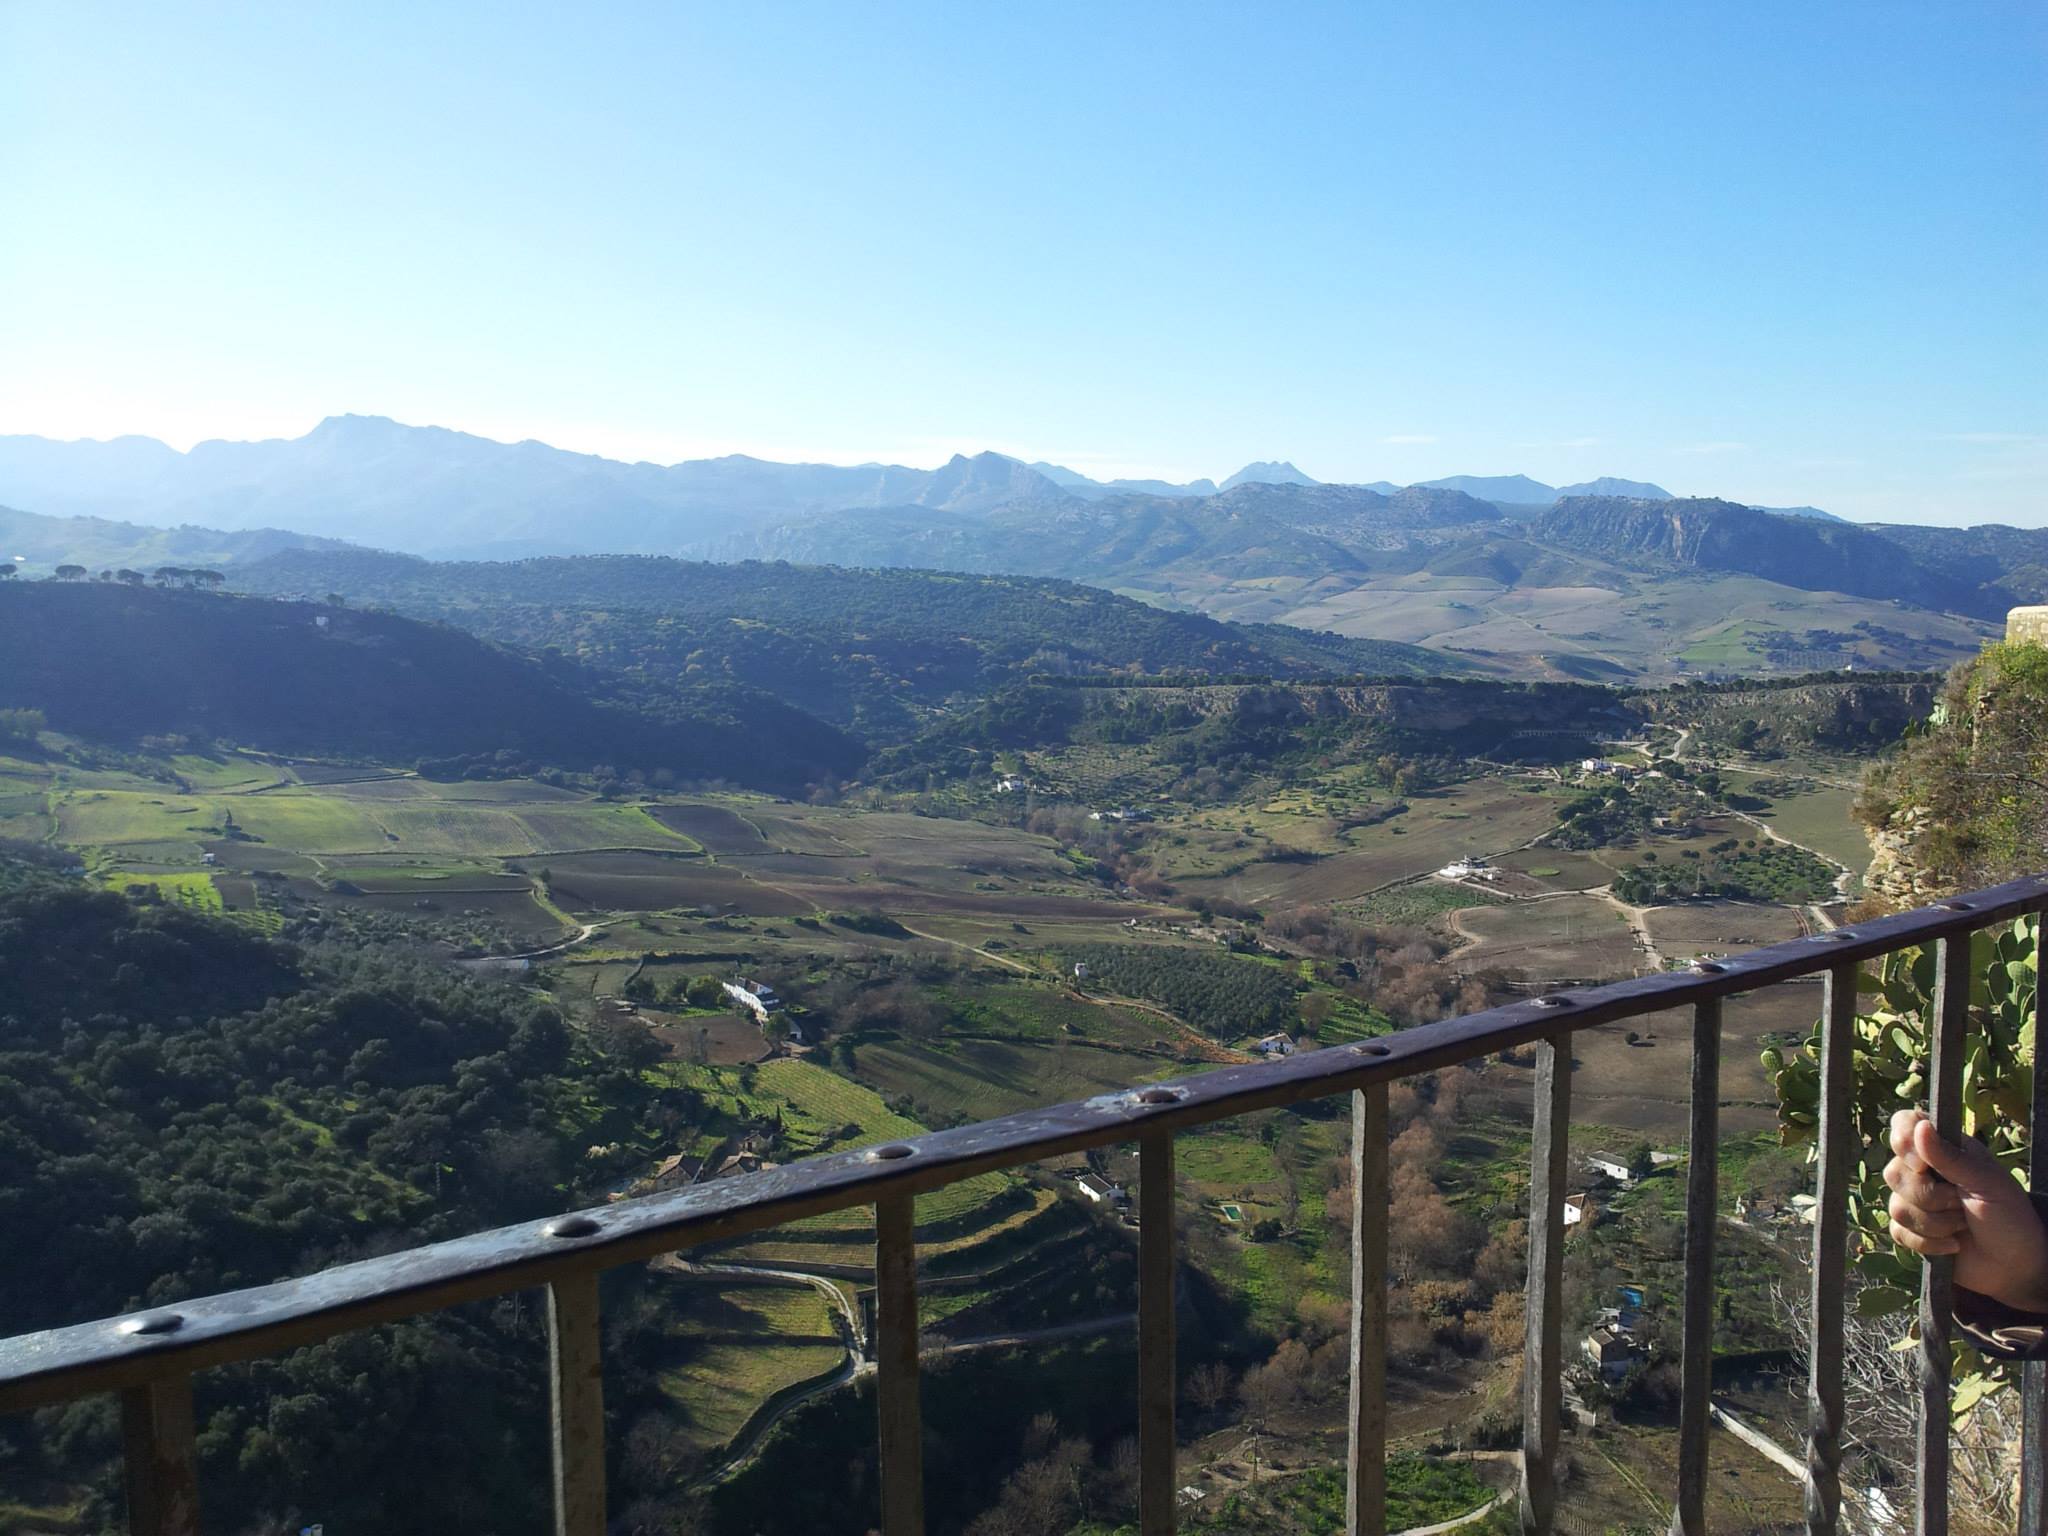 Breathtaking scenery in Ronda